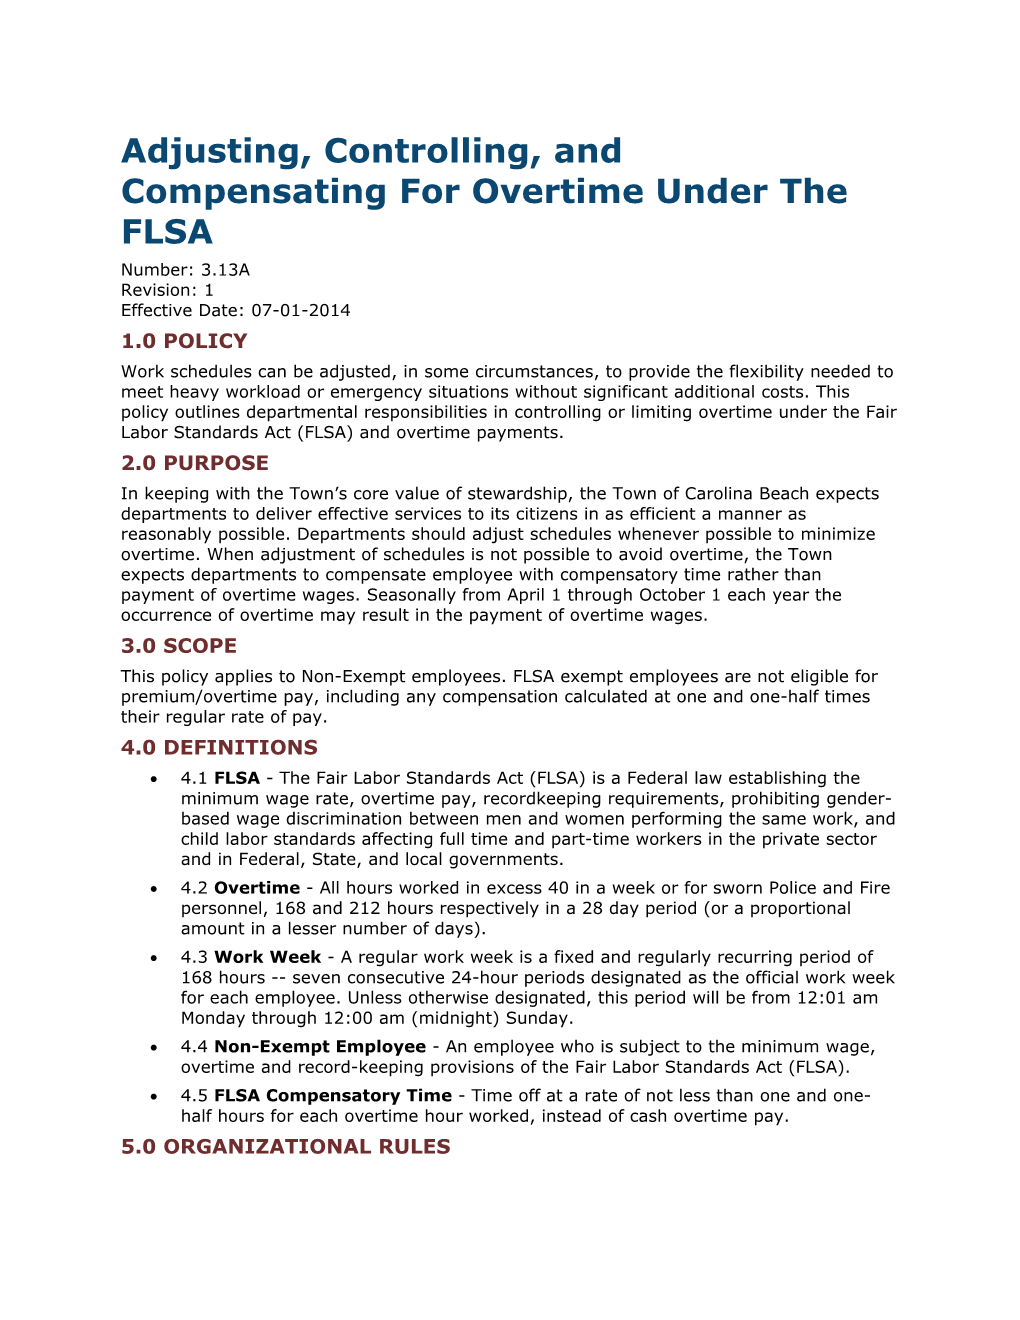 Adjusting, Controlling, and Compensating for Overtime Under the FLSA